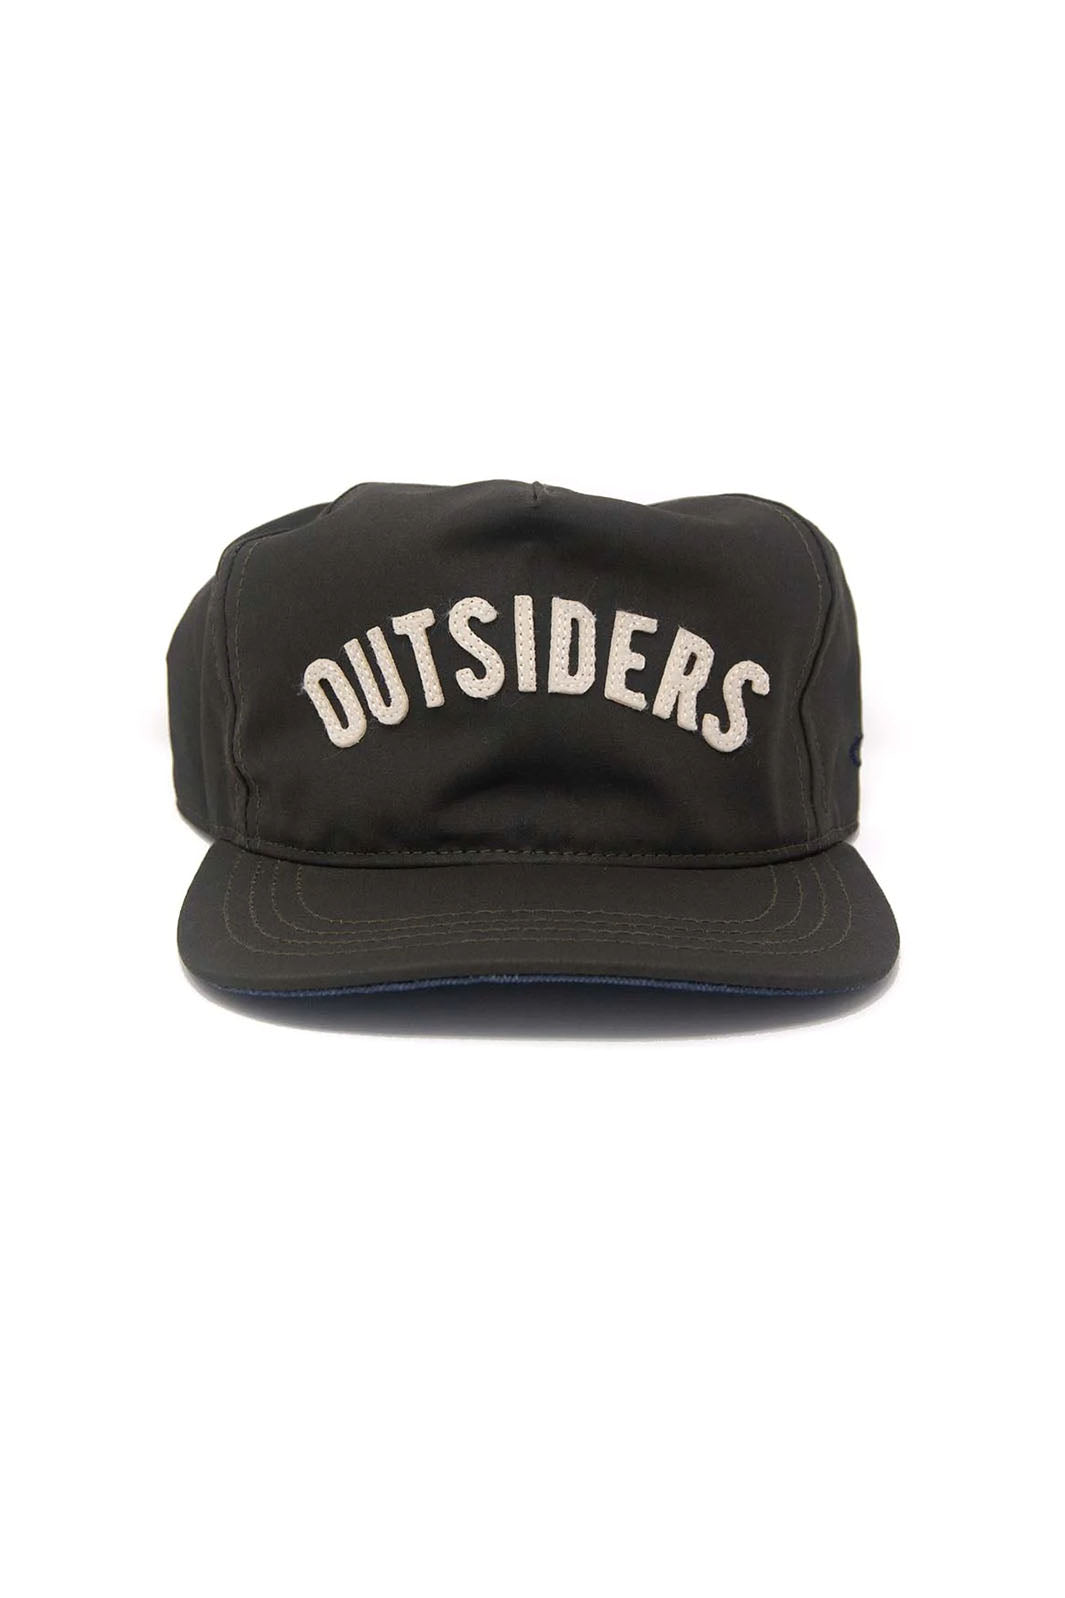 Outsiders Strapback Hat